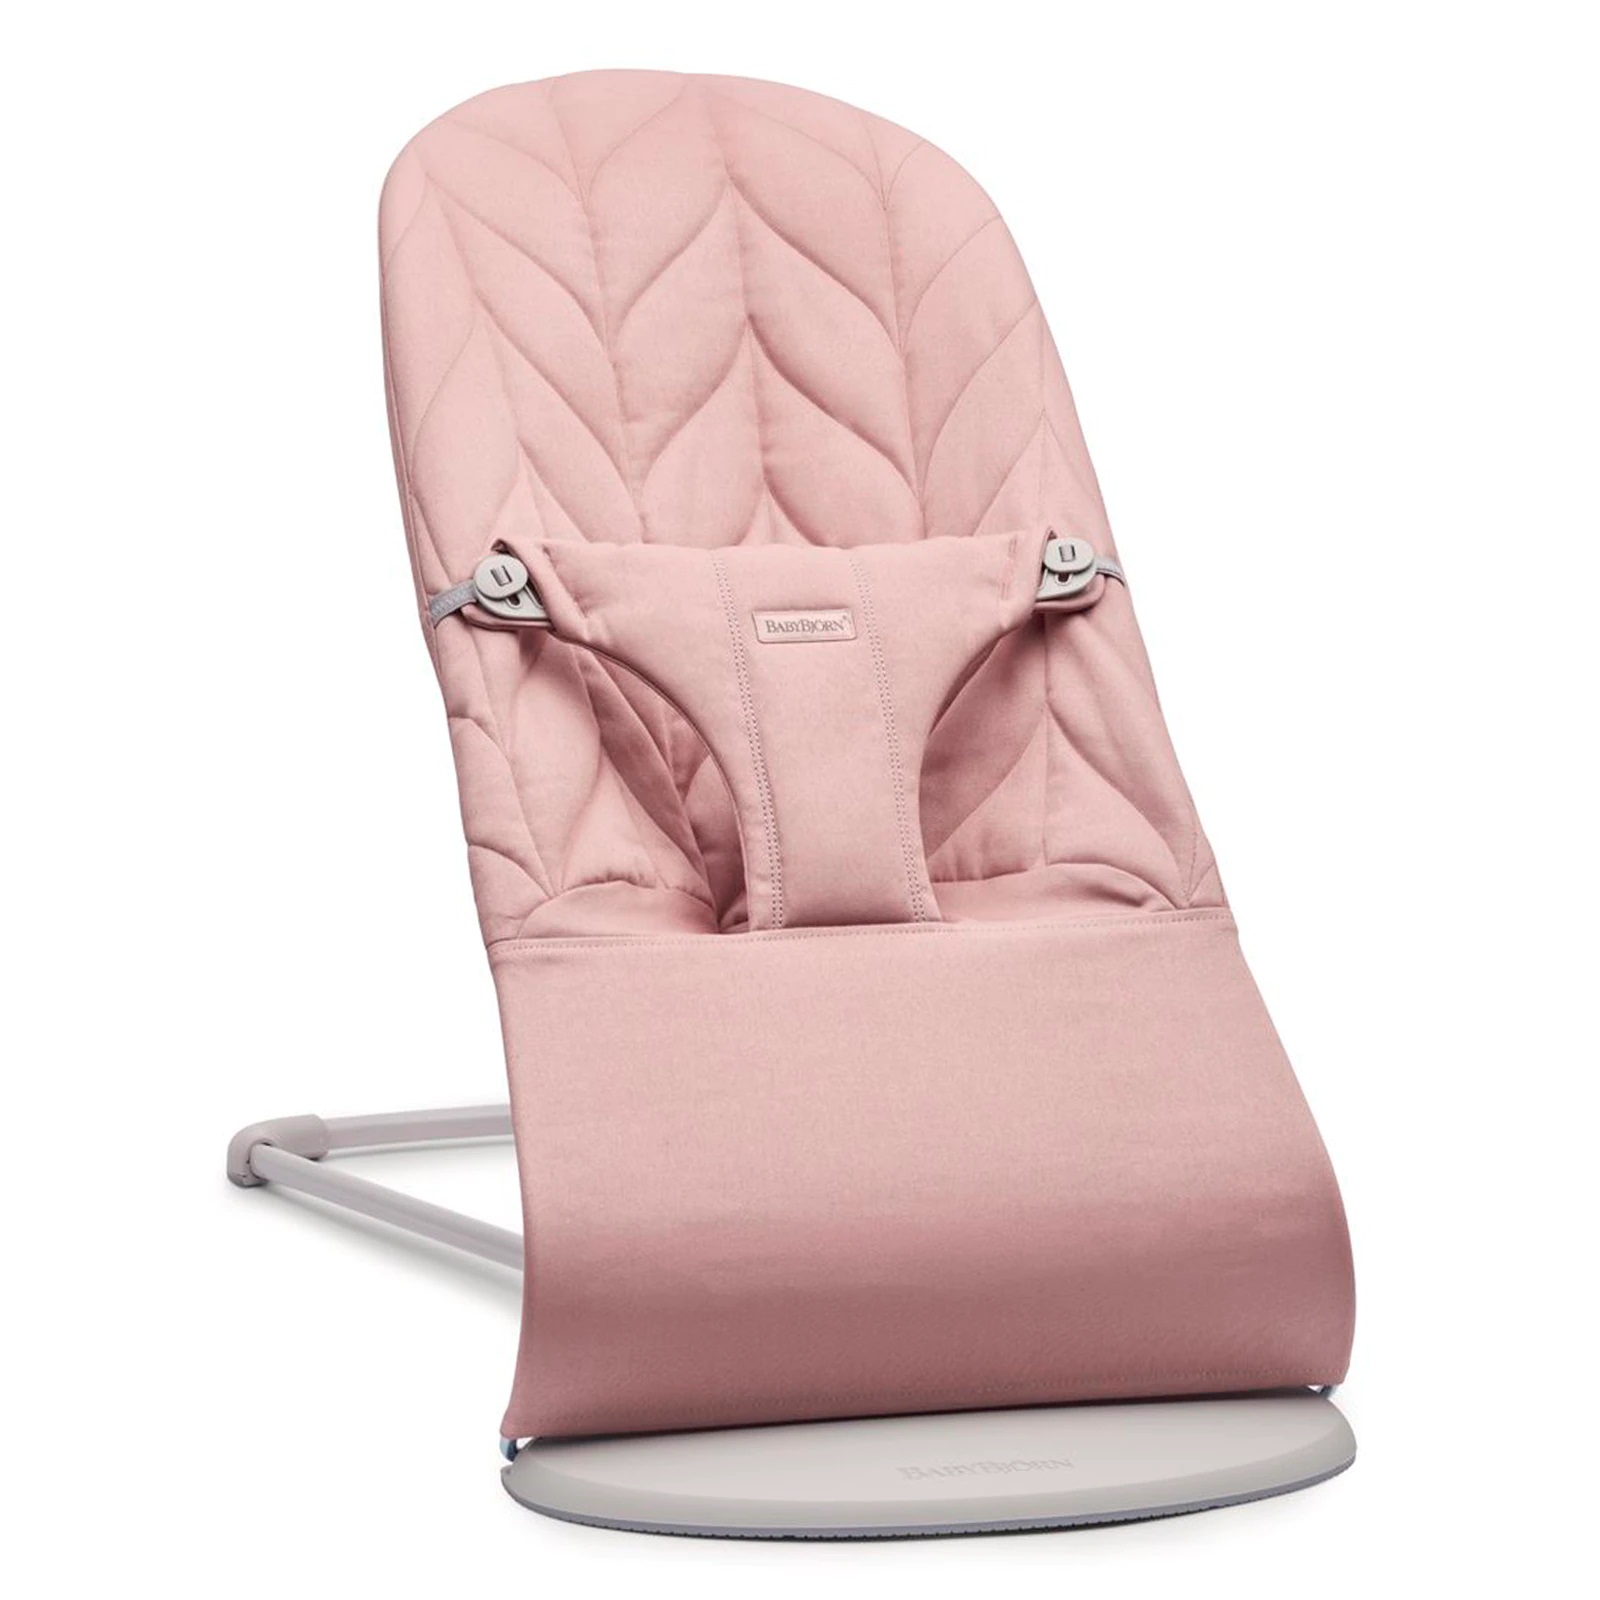 Кресло-шезлонг BabyBjorn Bliss Dusty Pink нежно-розовый, лепесток